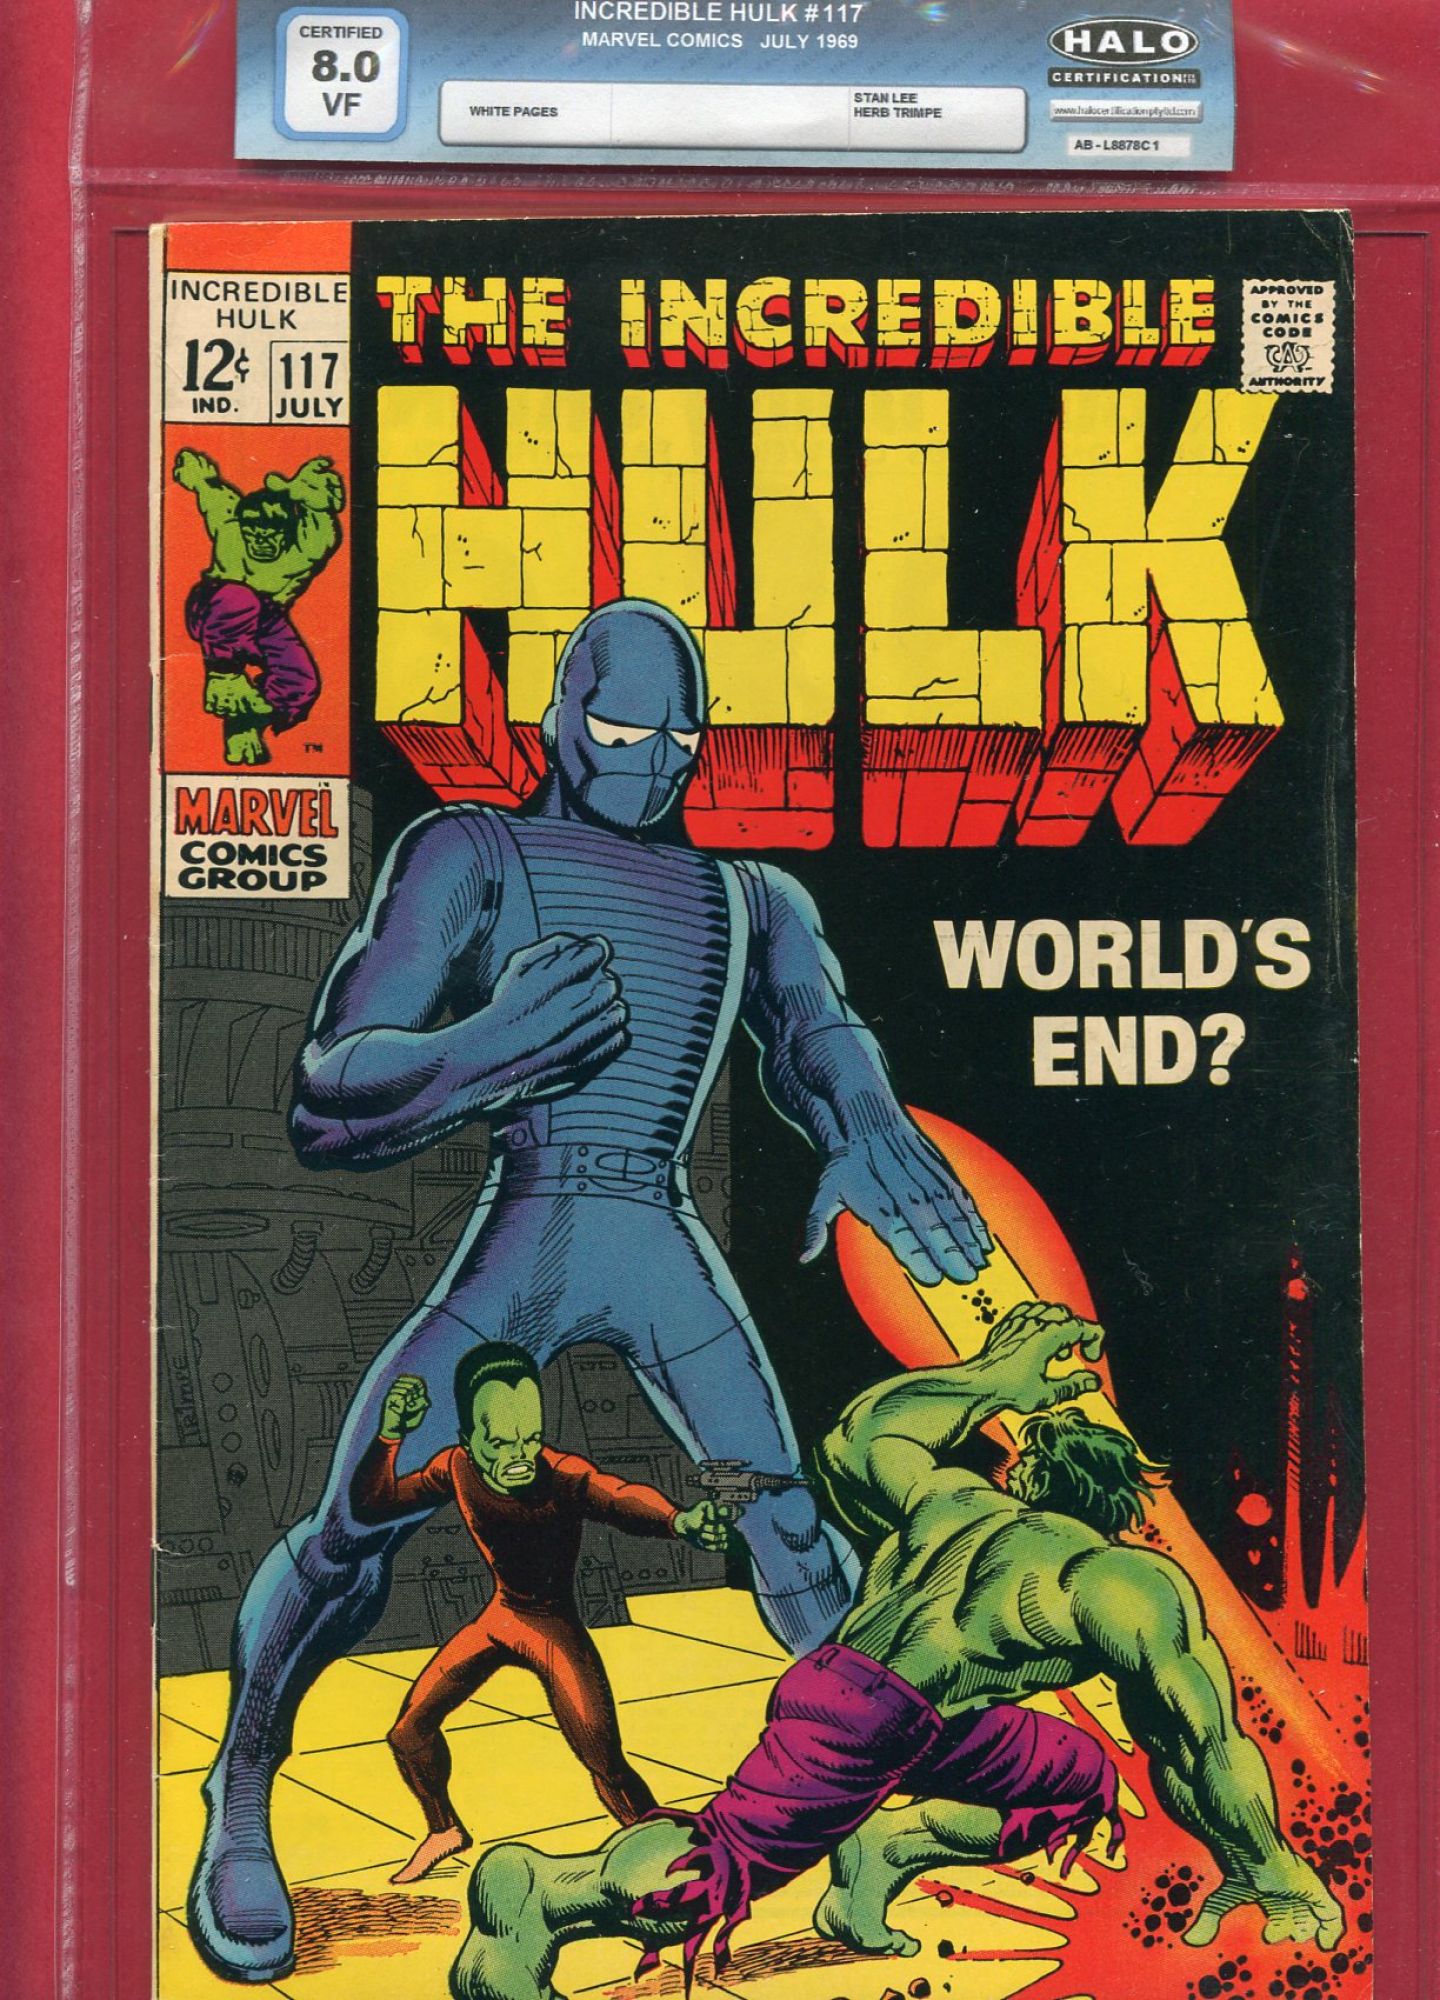 Incredible Hulk #117, Jul 1969, 8.0 VF Halo Soft Slab